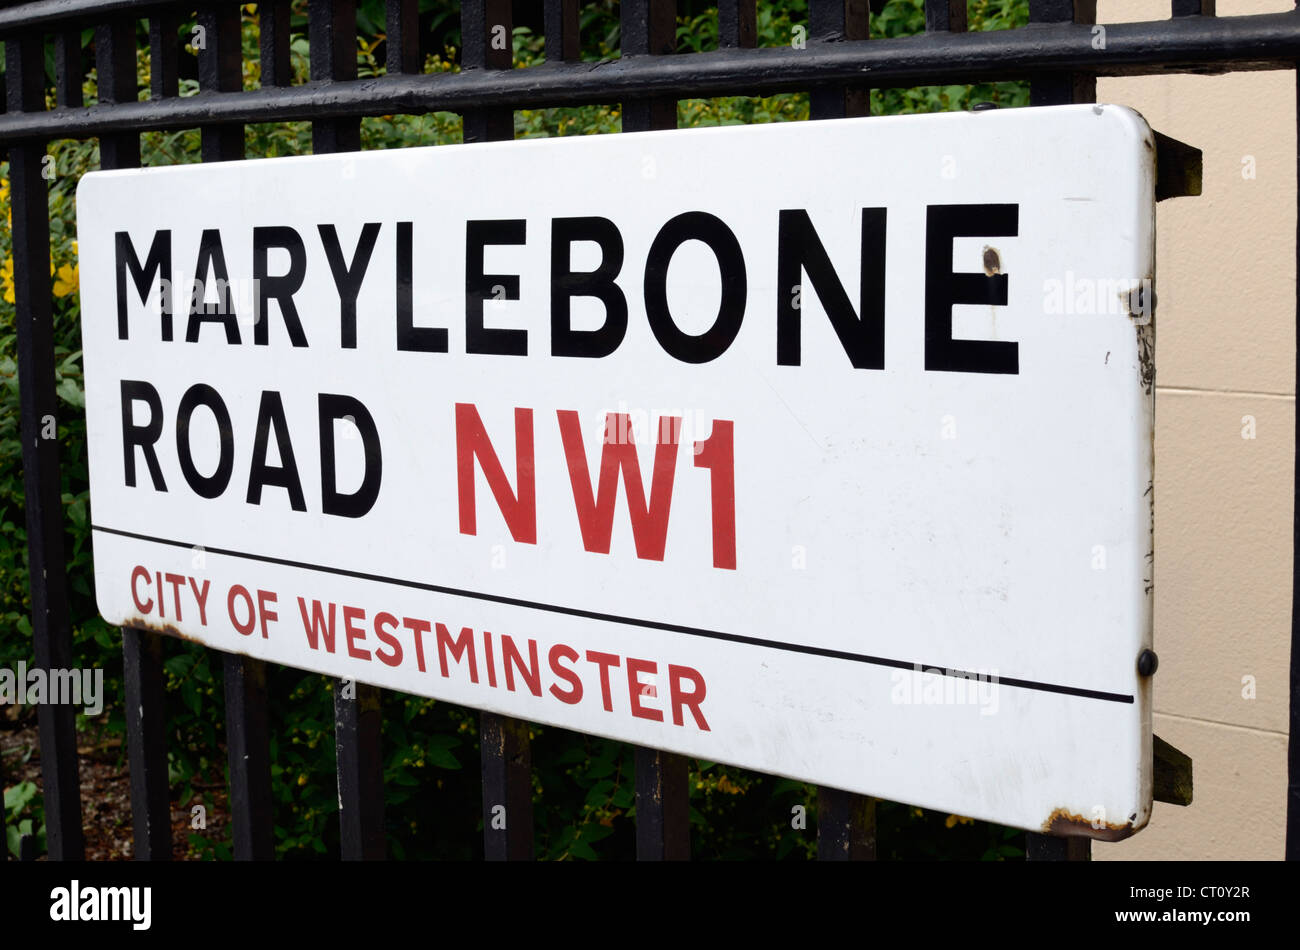 Marylebone Road NW1 street sign, City of Westminster, London, UK Stock Photo